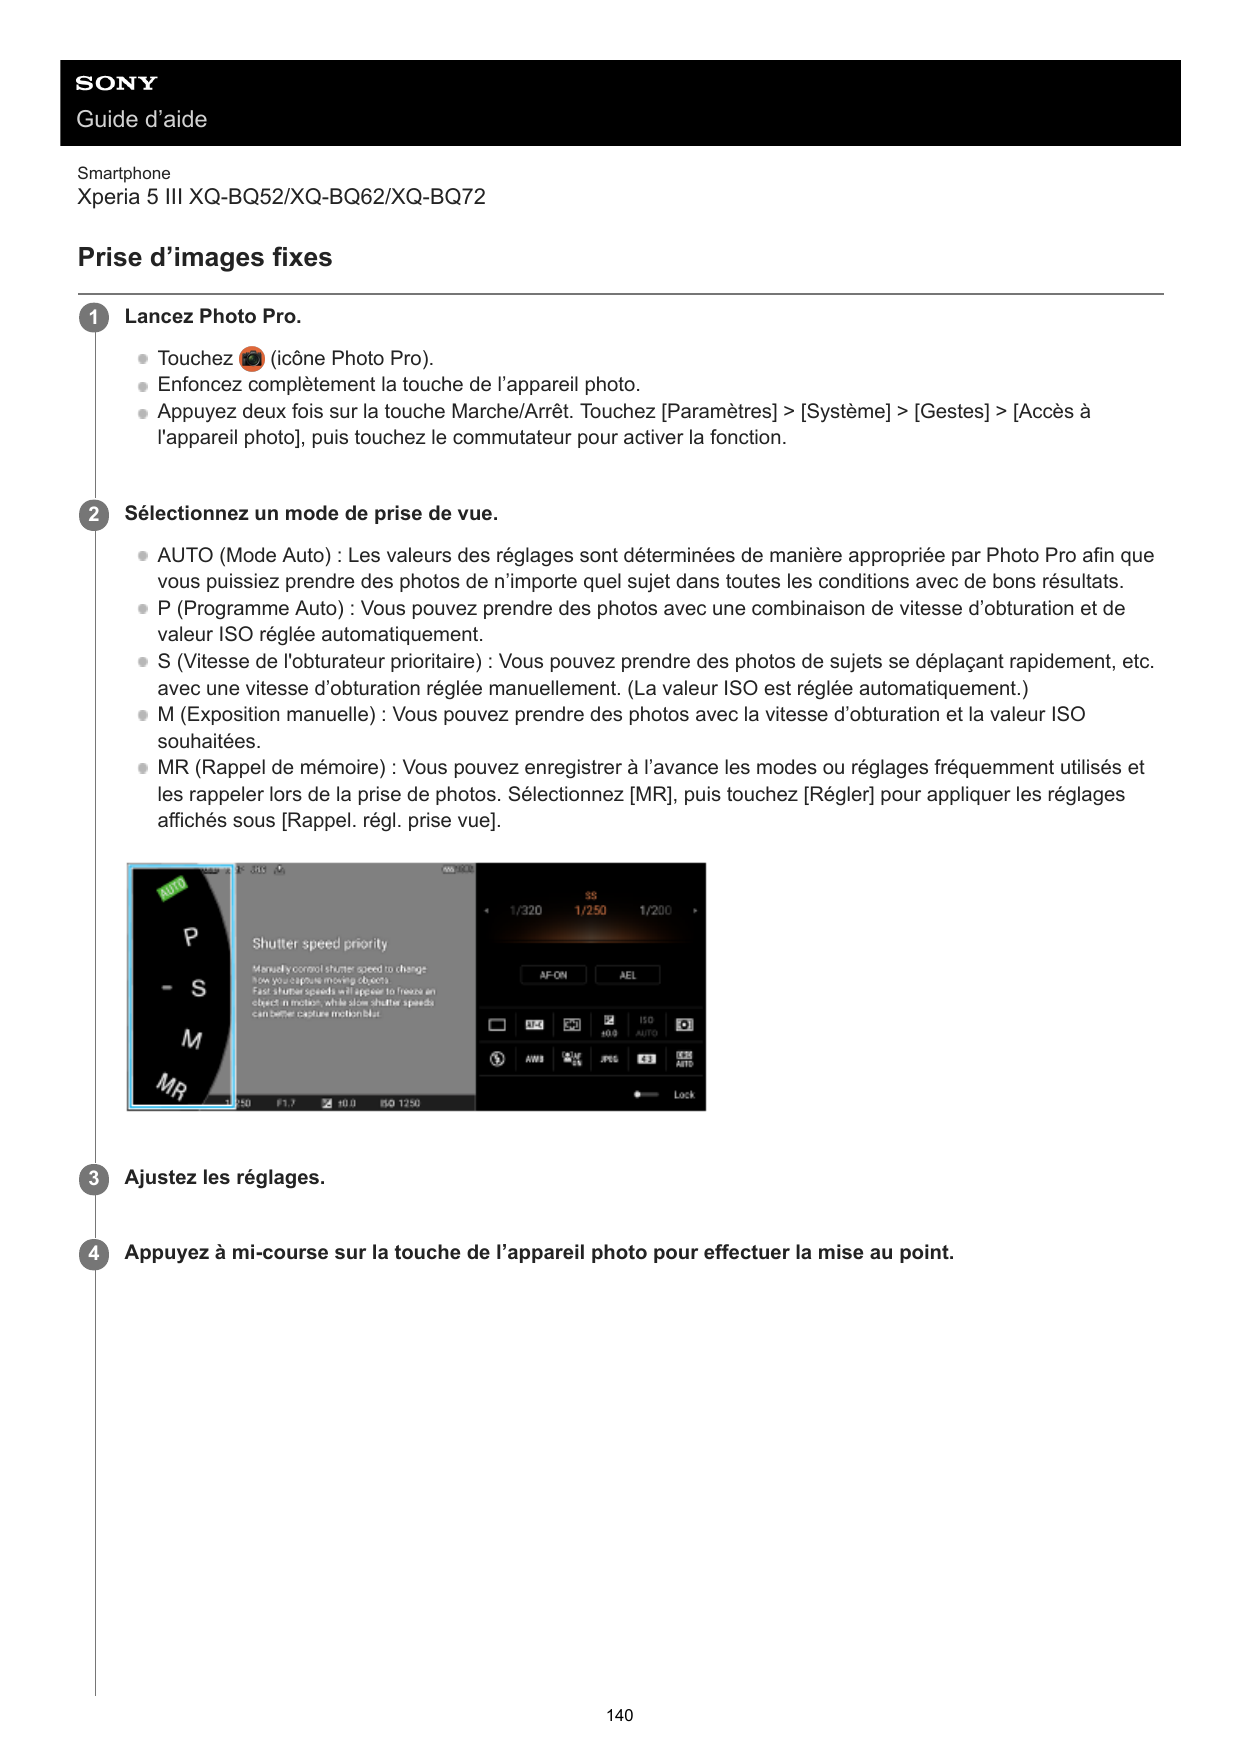 Guide d’aideSmartphoneXperia 5 III XQ-BQ52/XQ-BQ62/XQ-BQ72Prise d’images fixes1Lancez Photo Pro.Touchez(icône Photo Pro).Enfonce